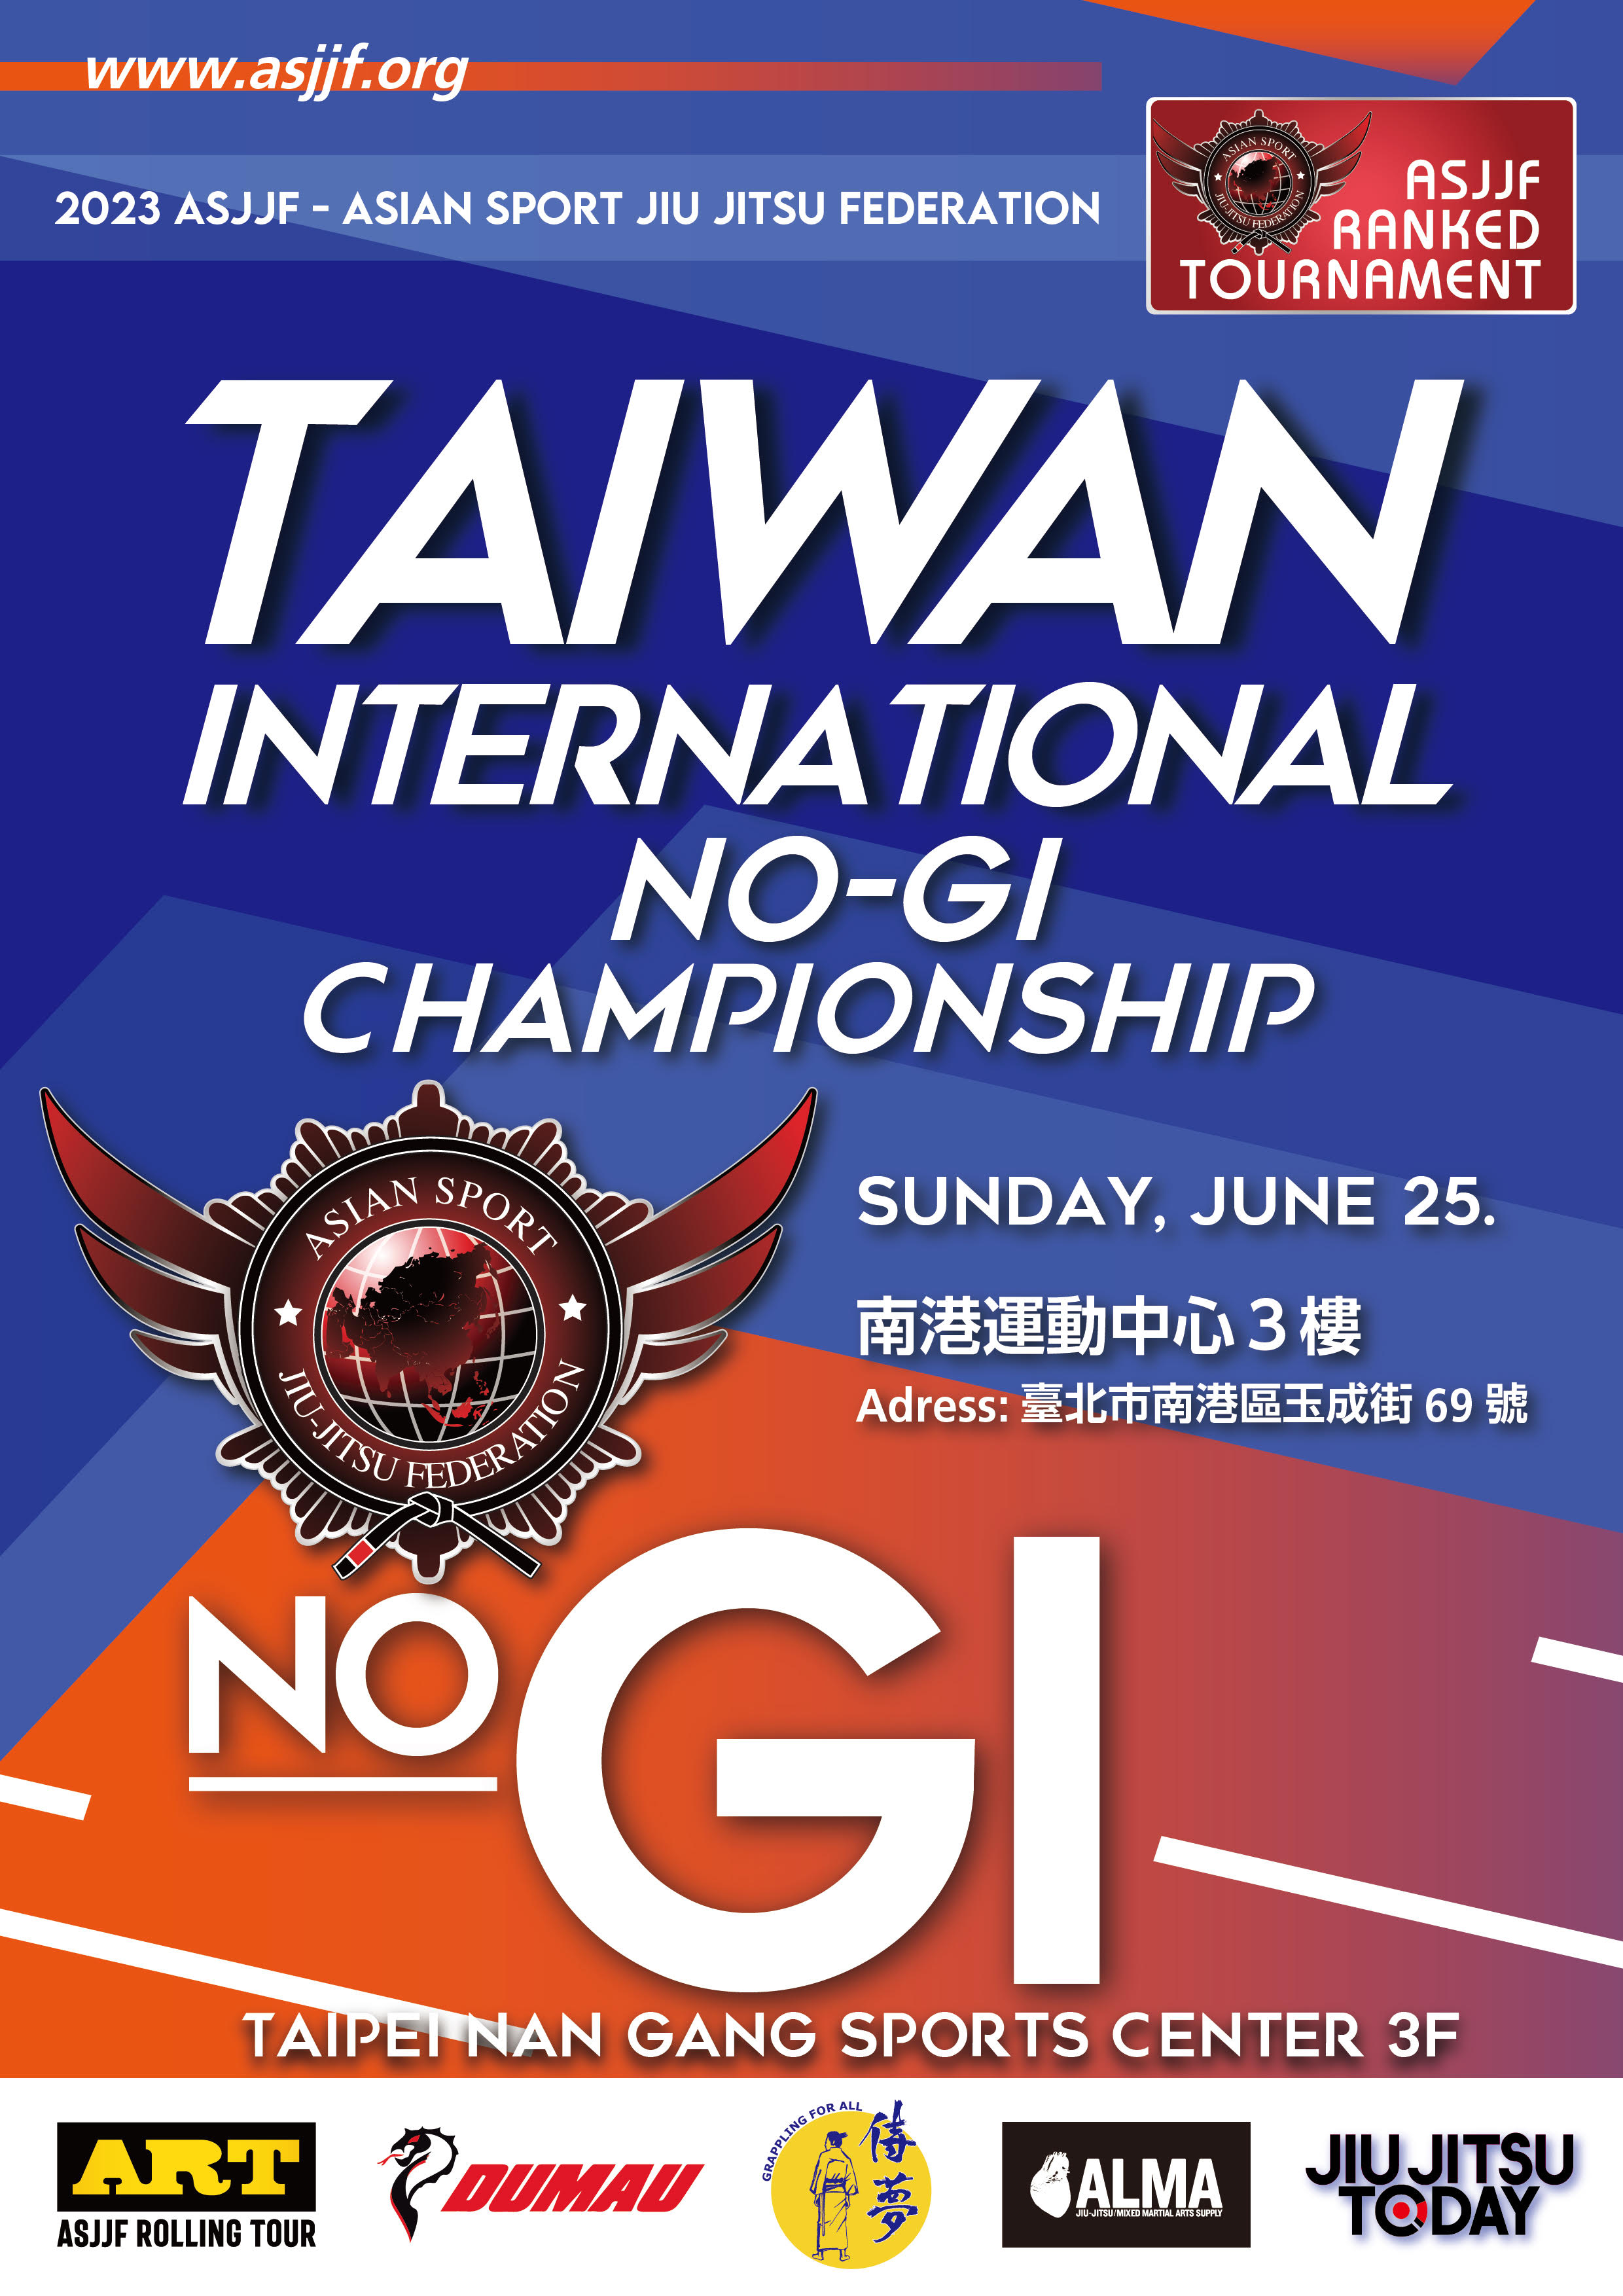 asjjf taiwan international no-gi championship 2023